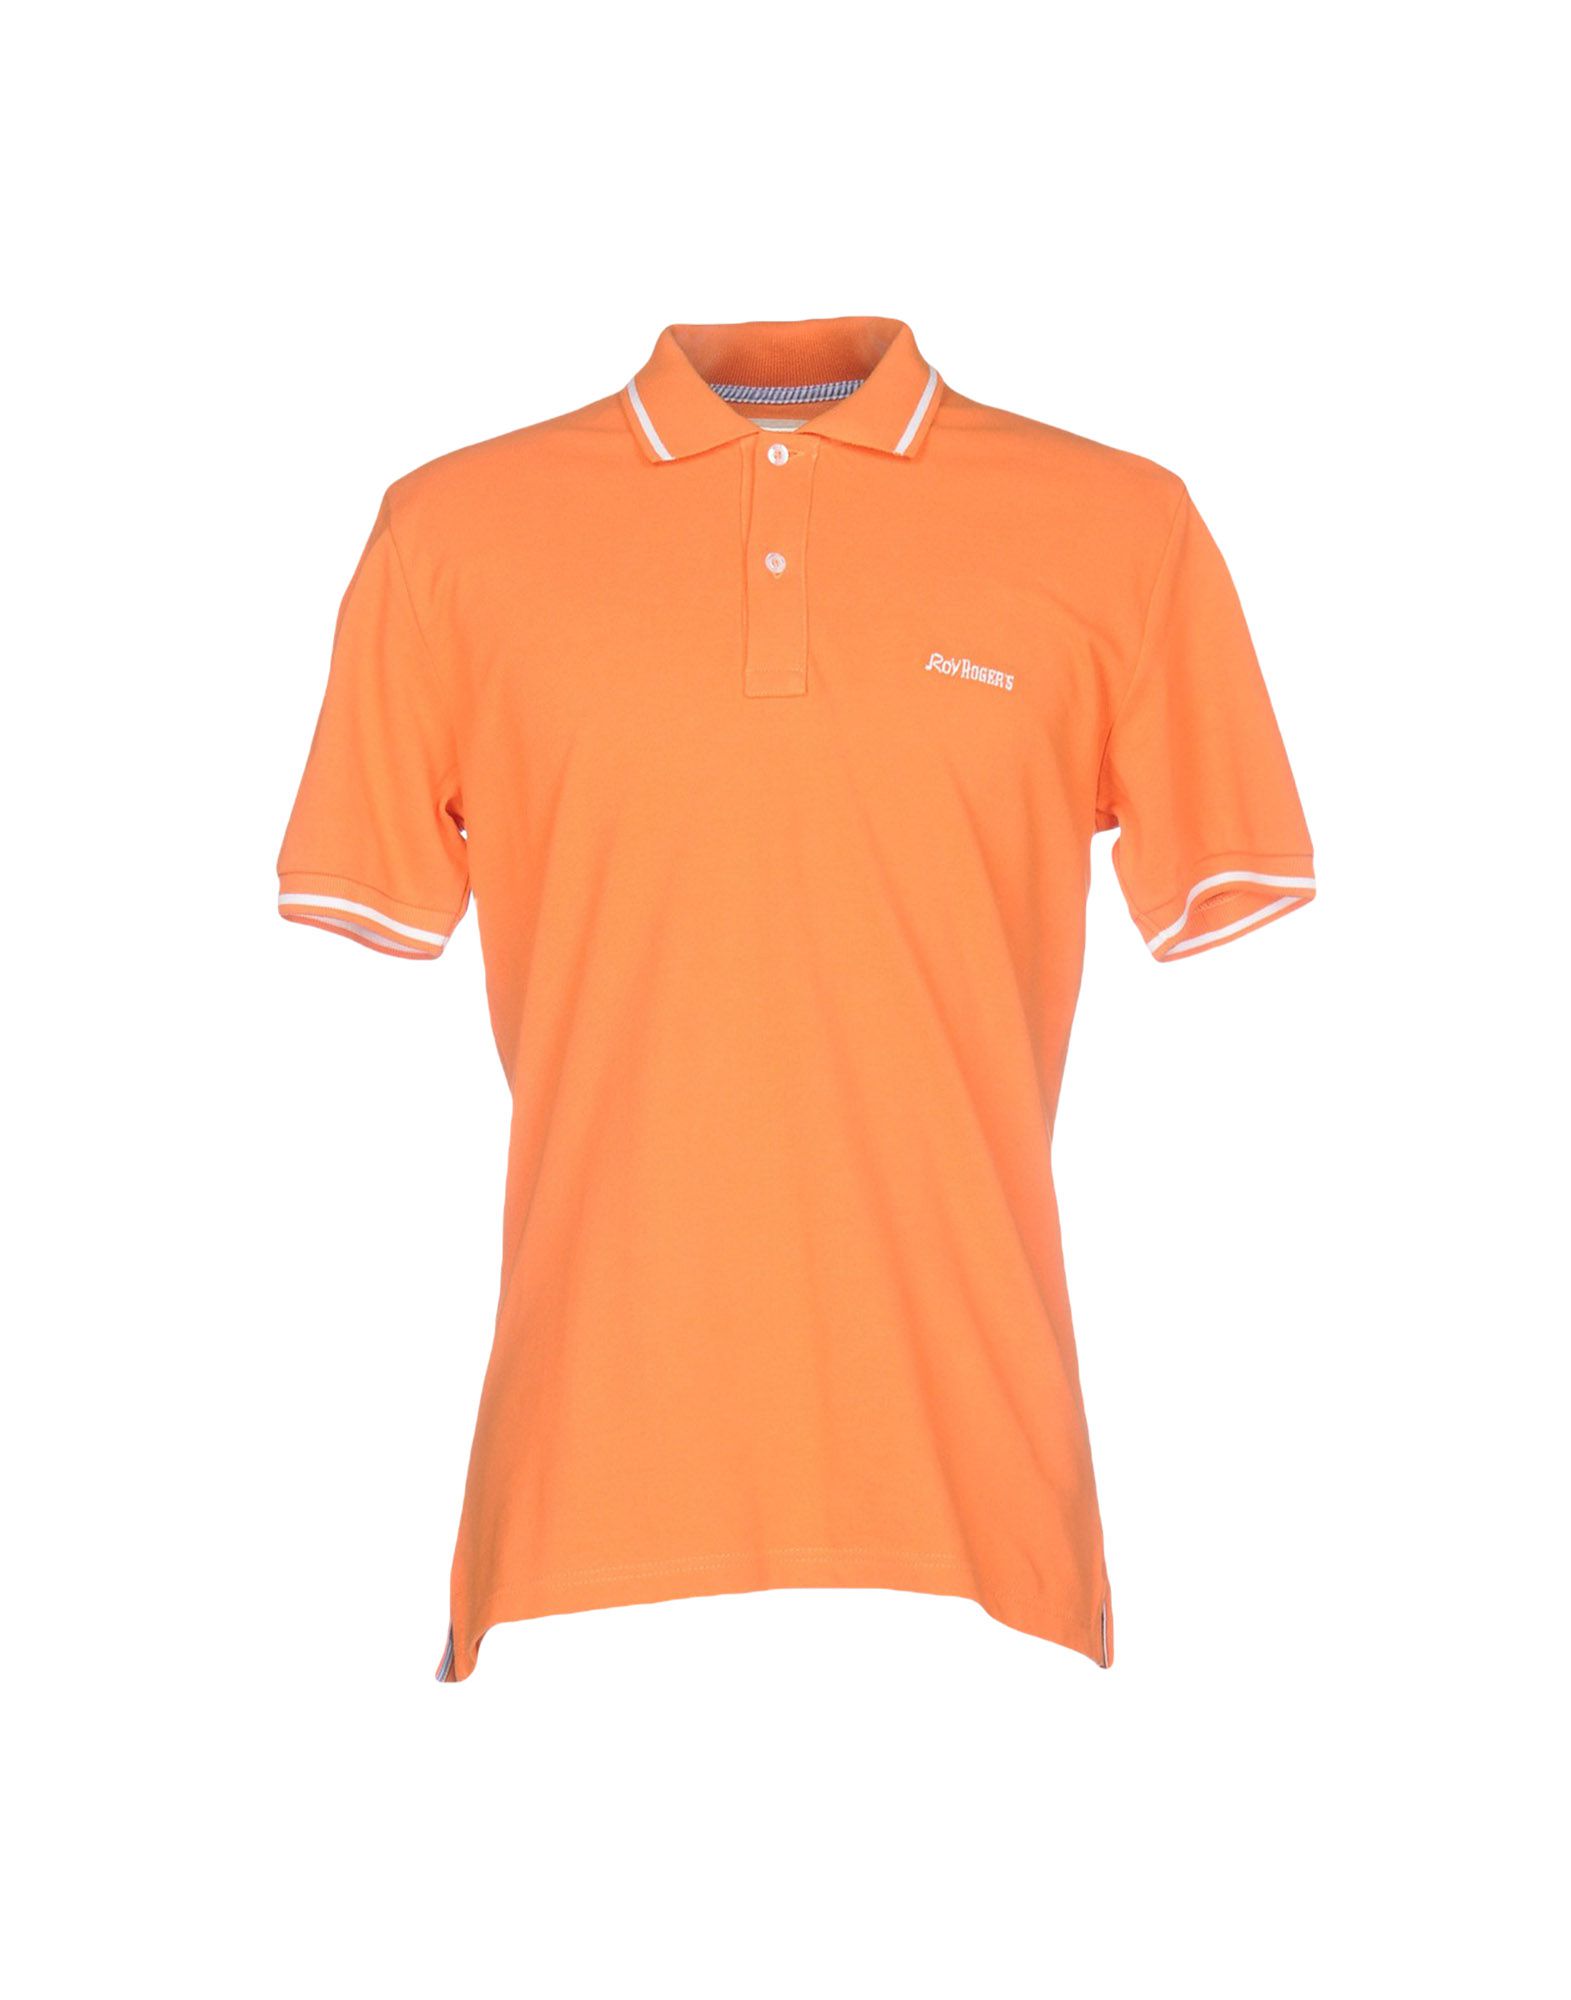 ROŸ ROGER'S Poloshirt Herren Orange von ROŸ ROGER'S